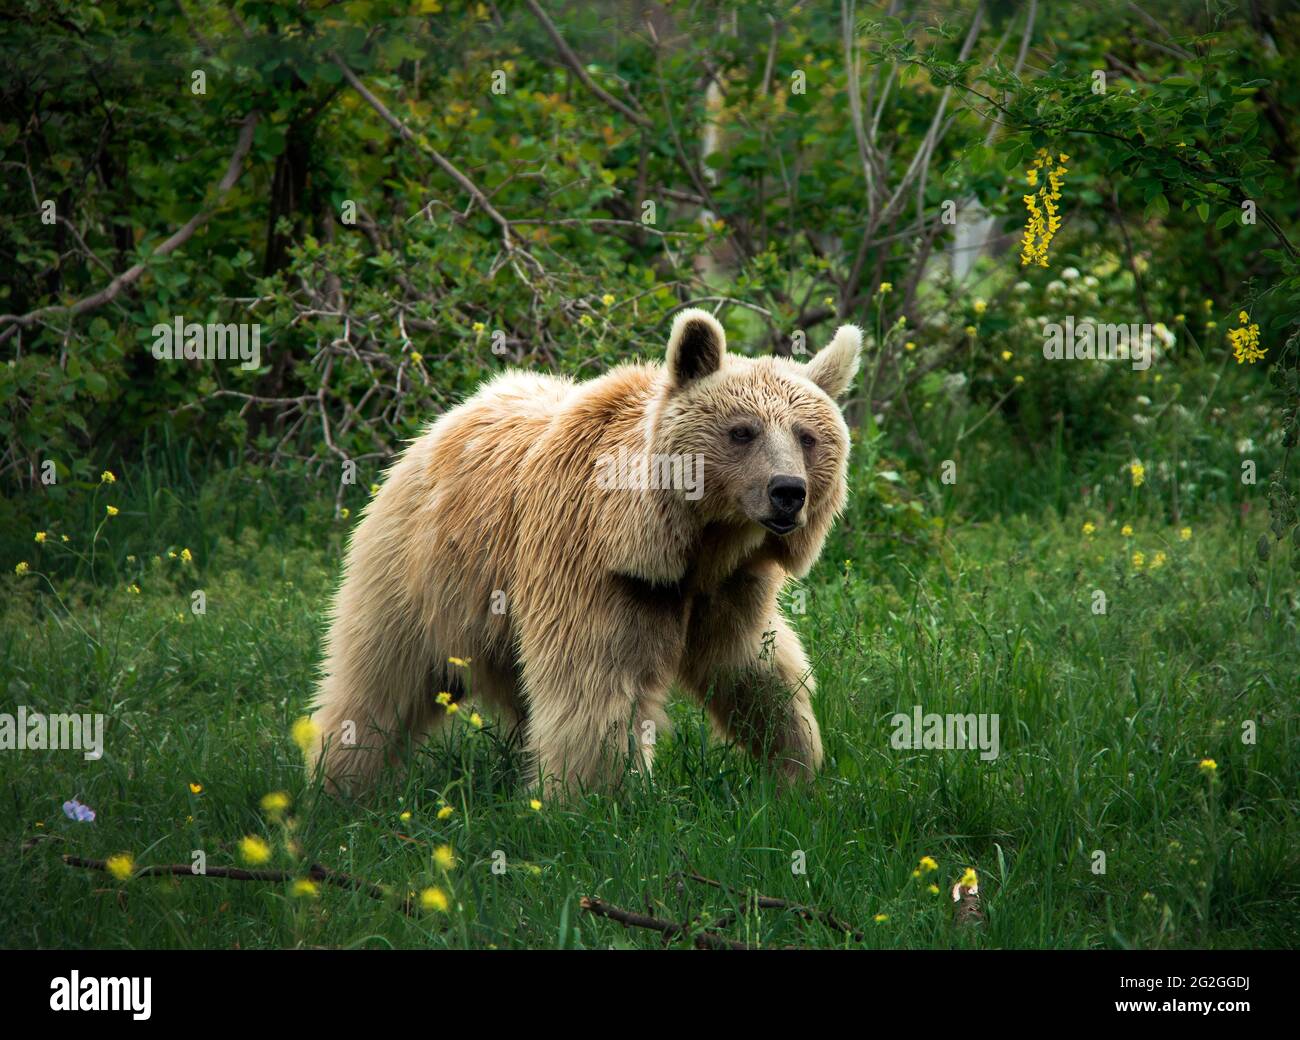 Brown bears in the nature, Georgia Stock Photo